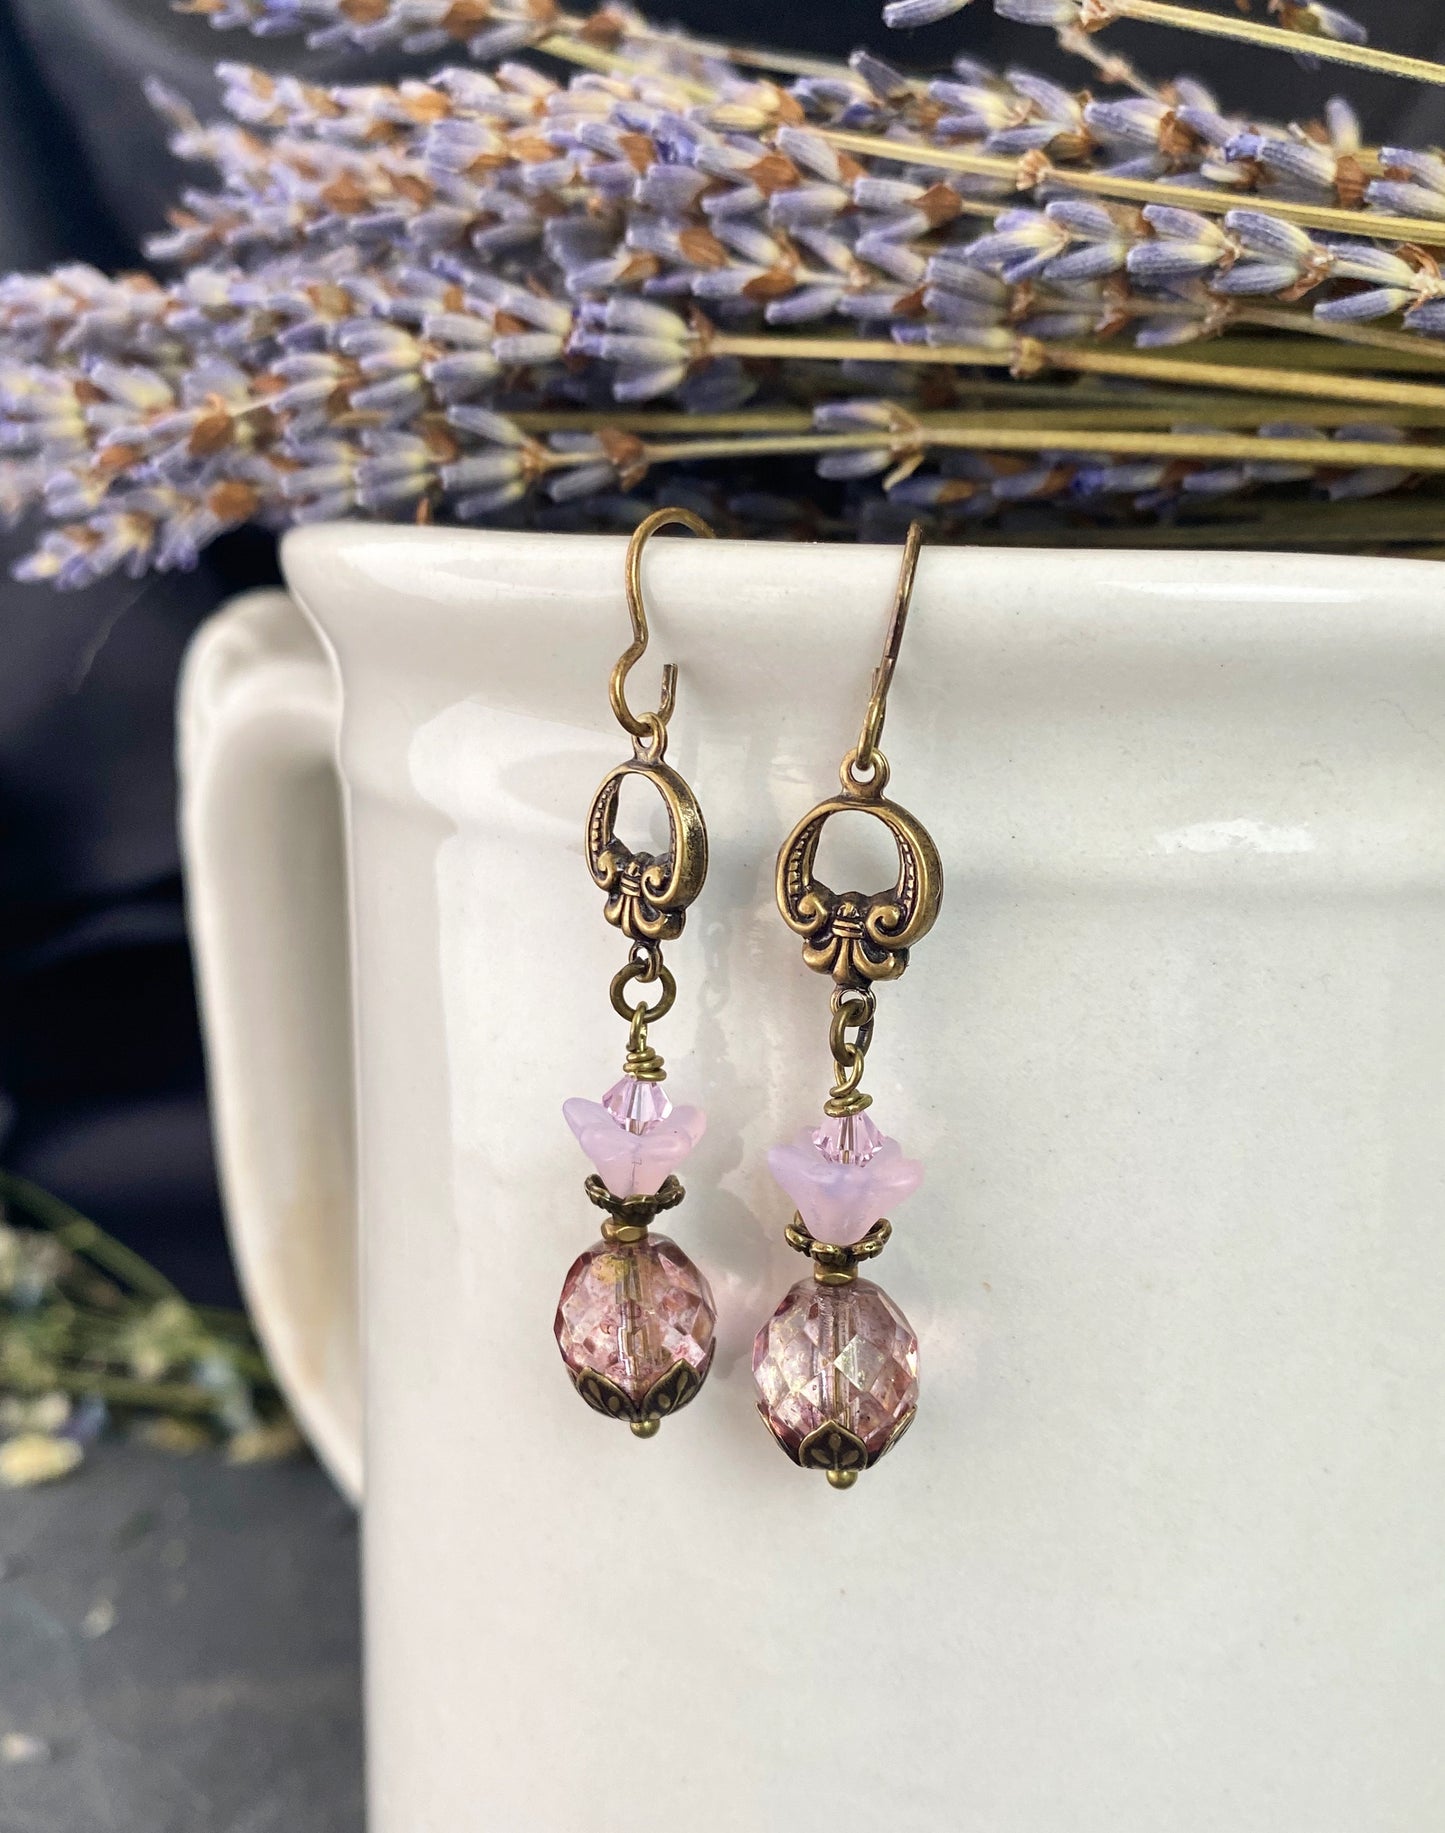 Pink Czech glass, bronze flower bead caps, and bronze metal earrings.